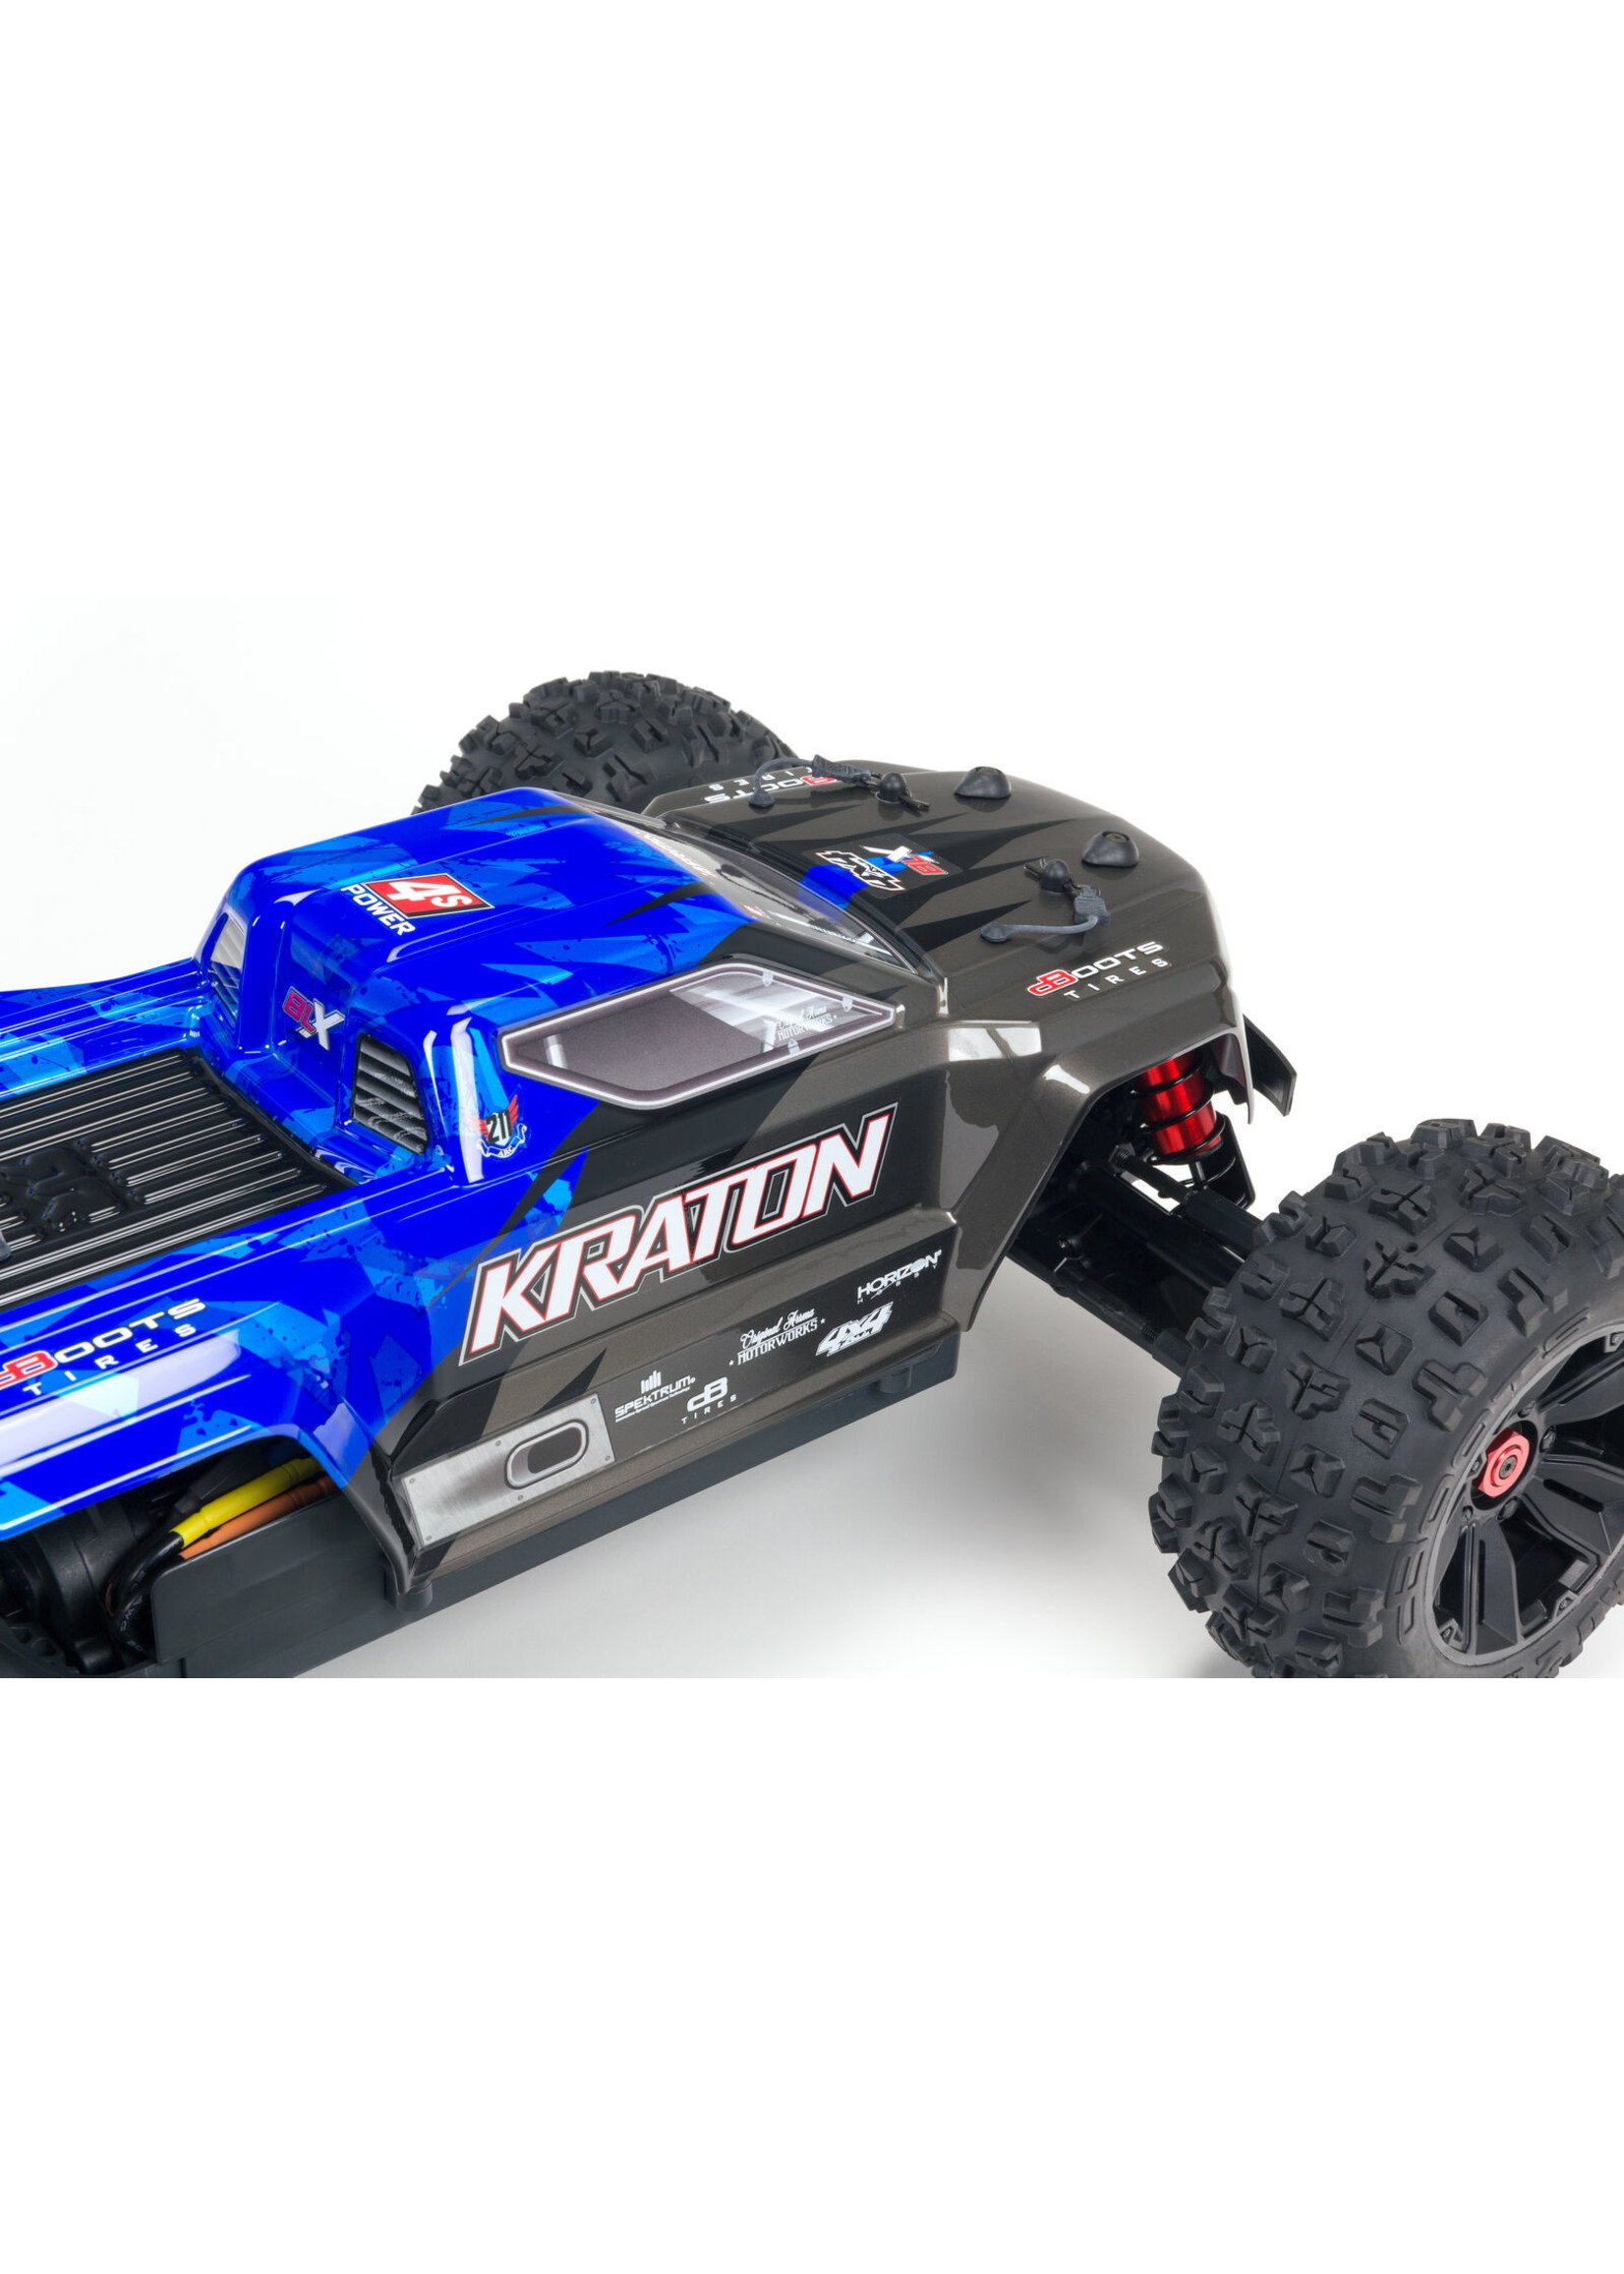 Arrma 1/10 Kraton 4S BLX 4WD Speed Monster Truck - Blue/Black